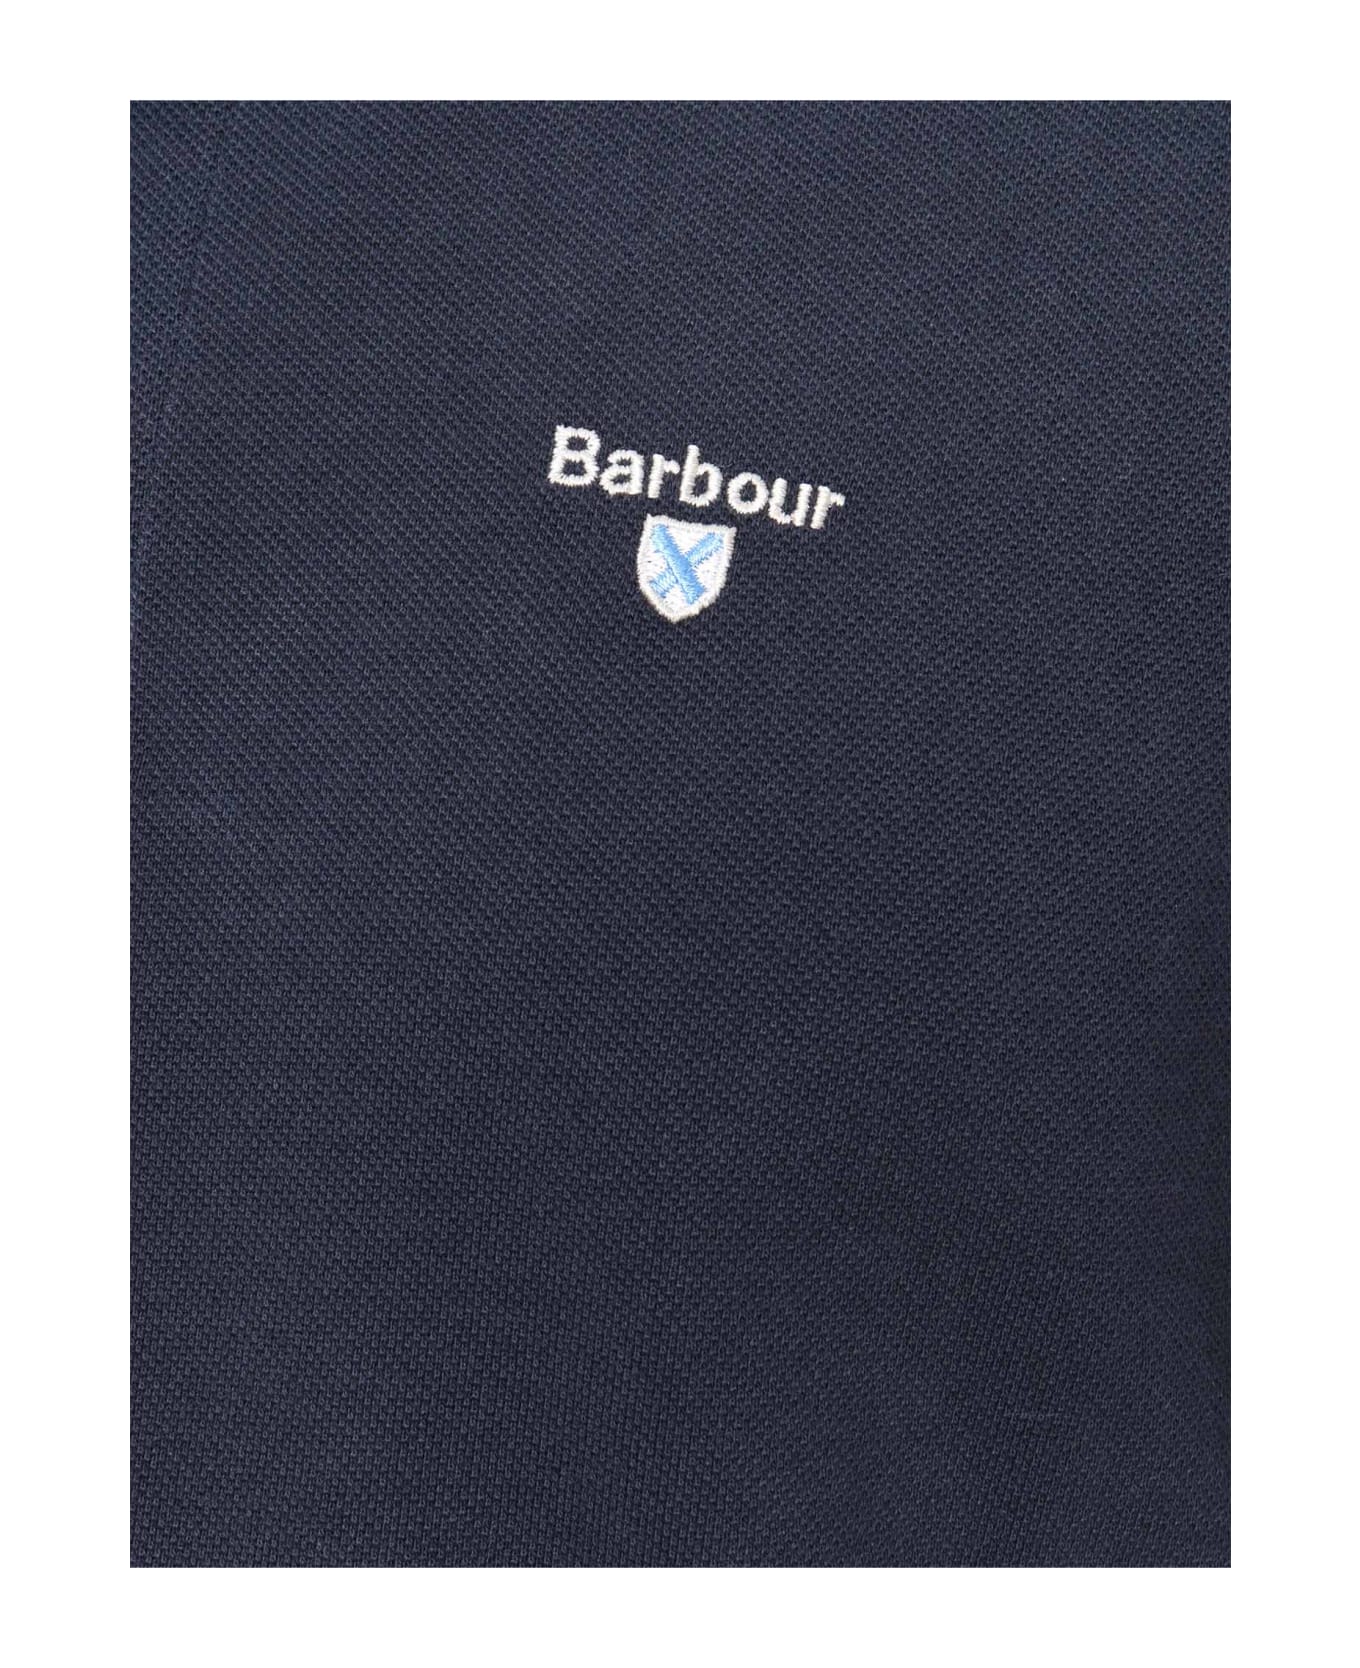 Barbour Blue Polo - BLUE